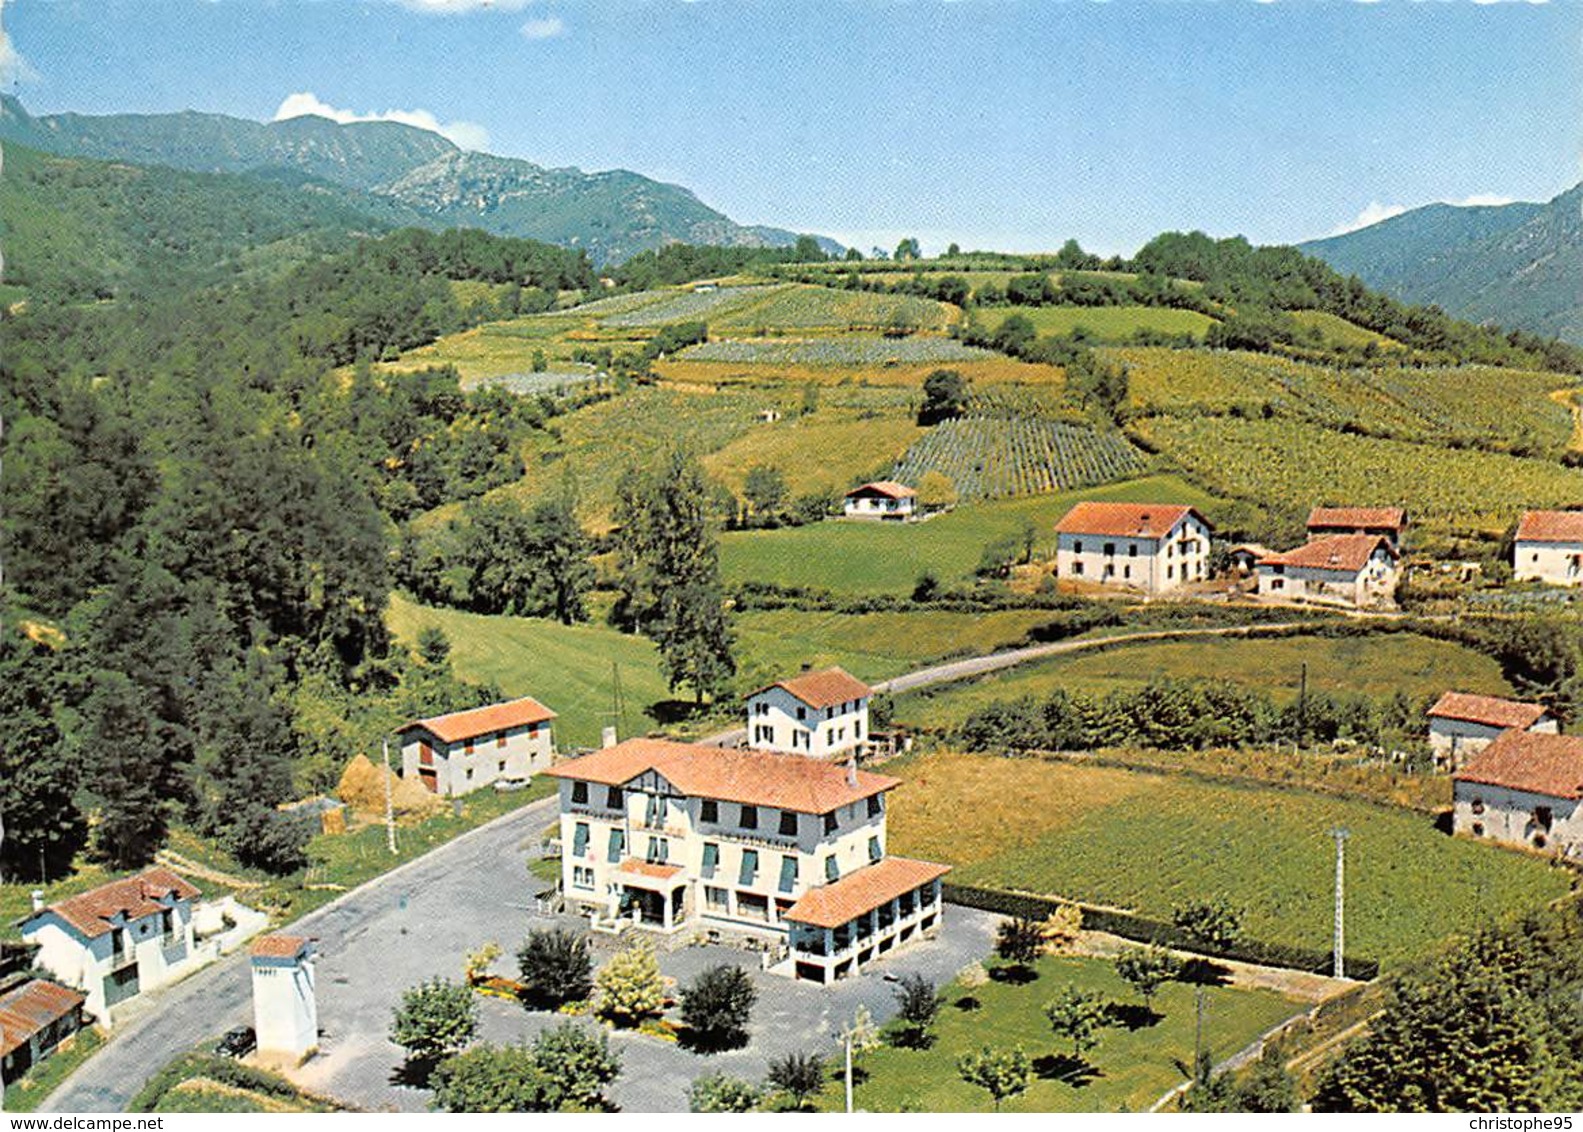 64 .n° 21343 . Saint Etienne De Baigorry . Hotel Restaurant .vue Generale . Cpsm .10.5 X 15cm . - Saint Etienne De Baigorry